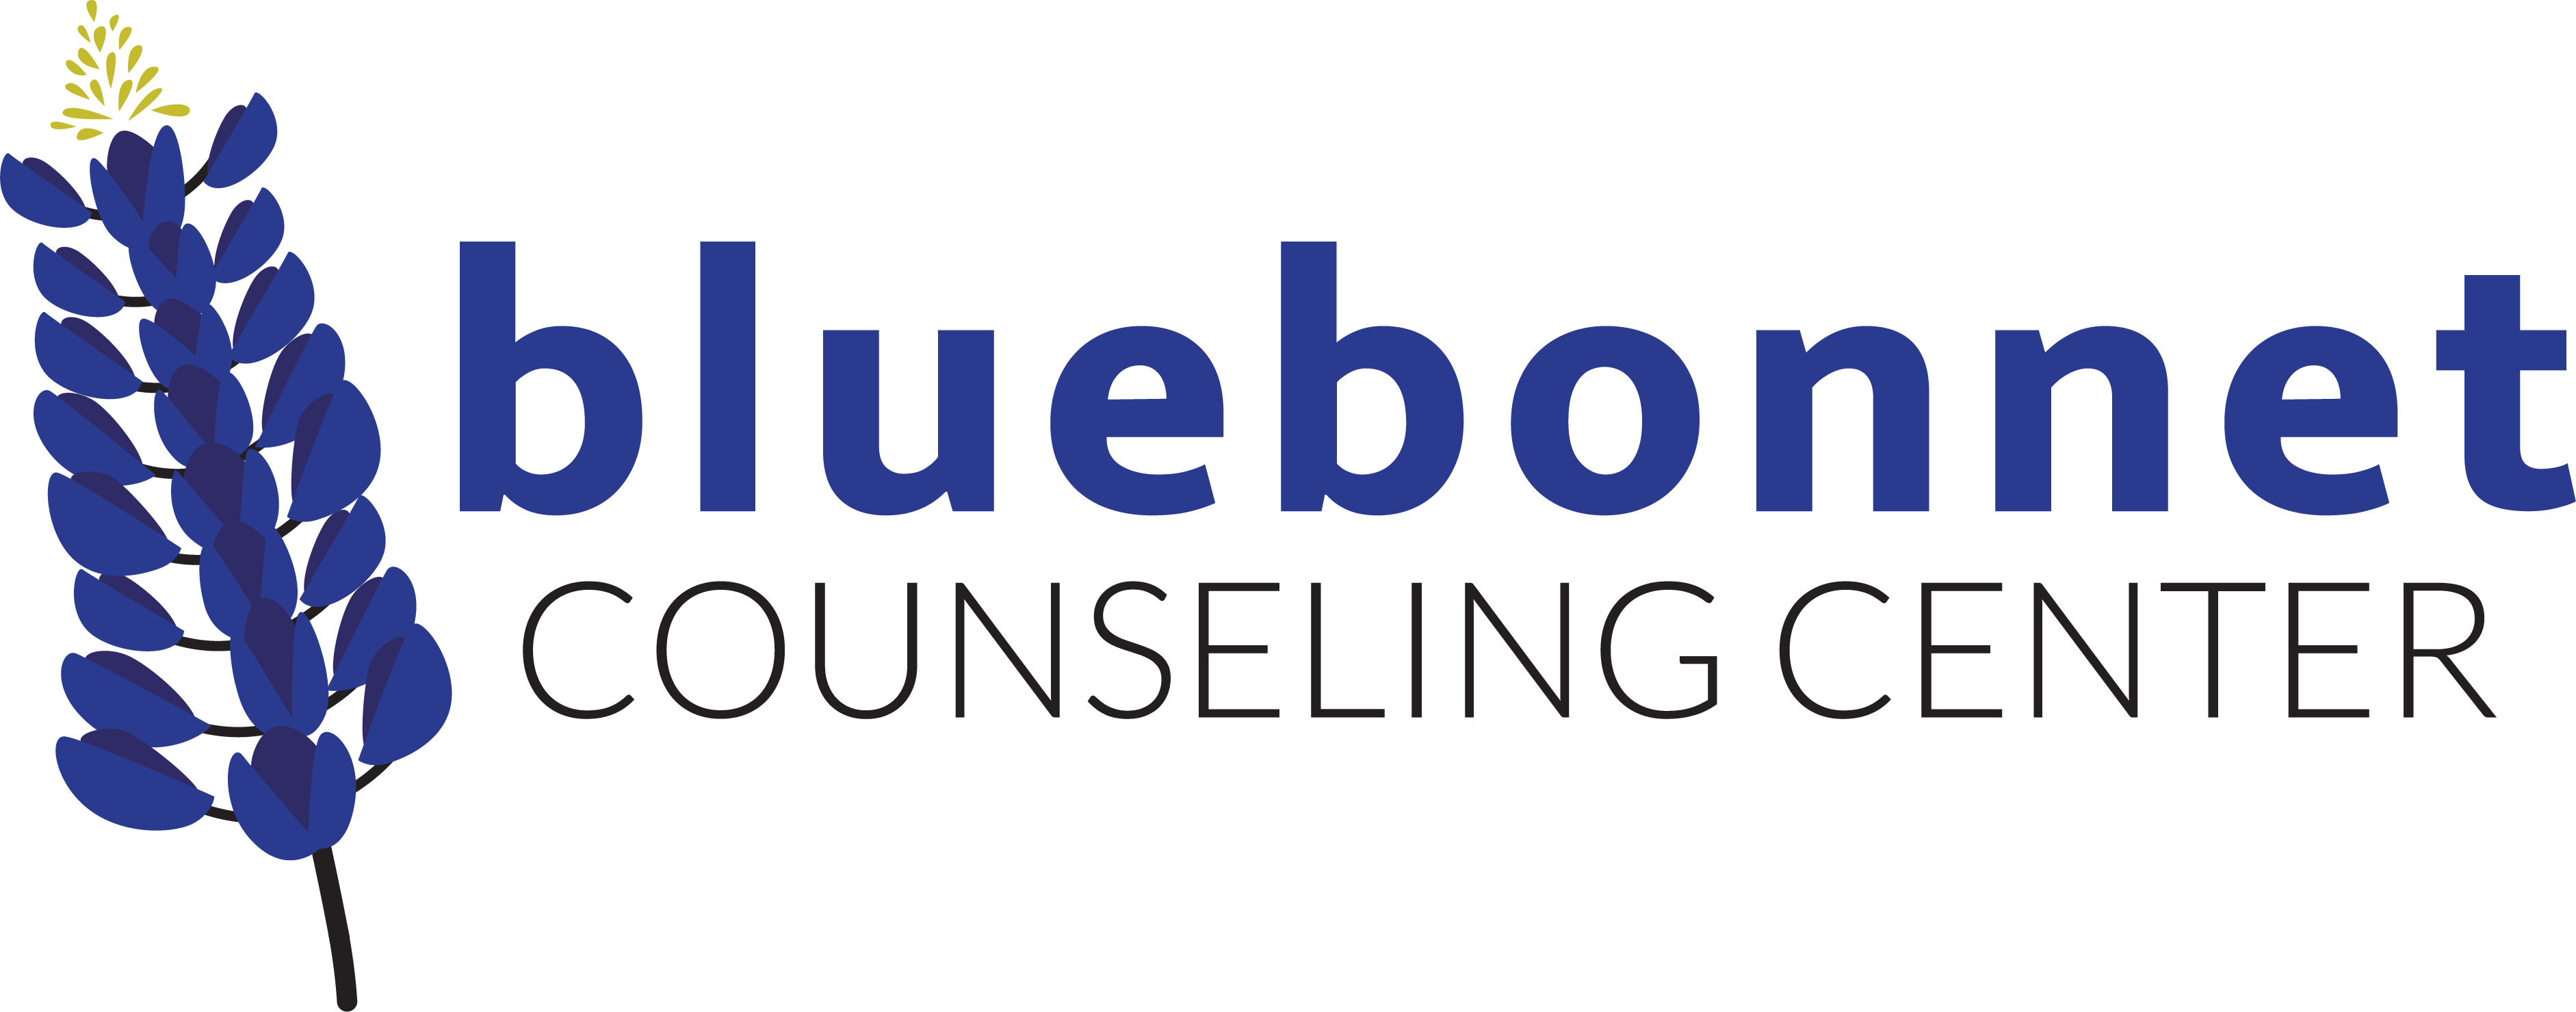 Bluebonnet Counseling Center